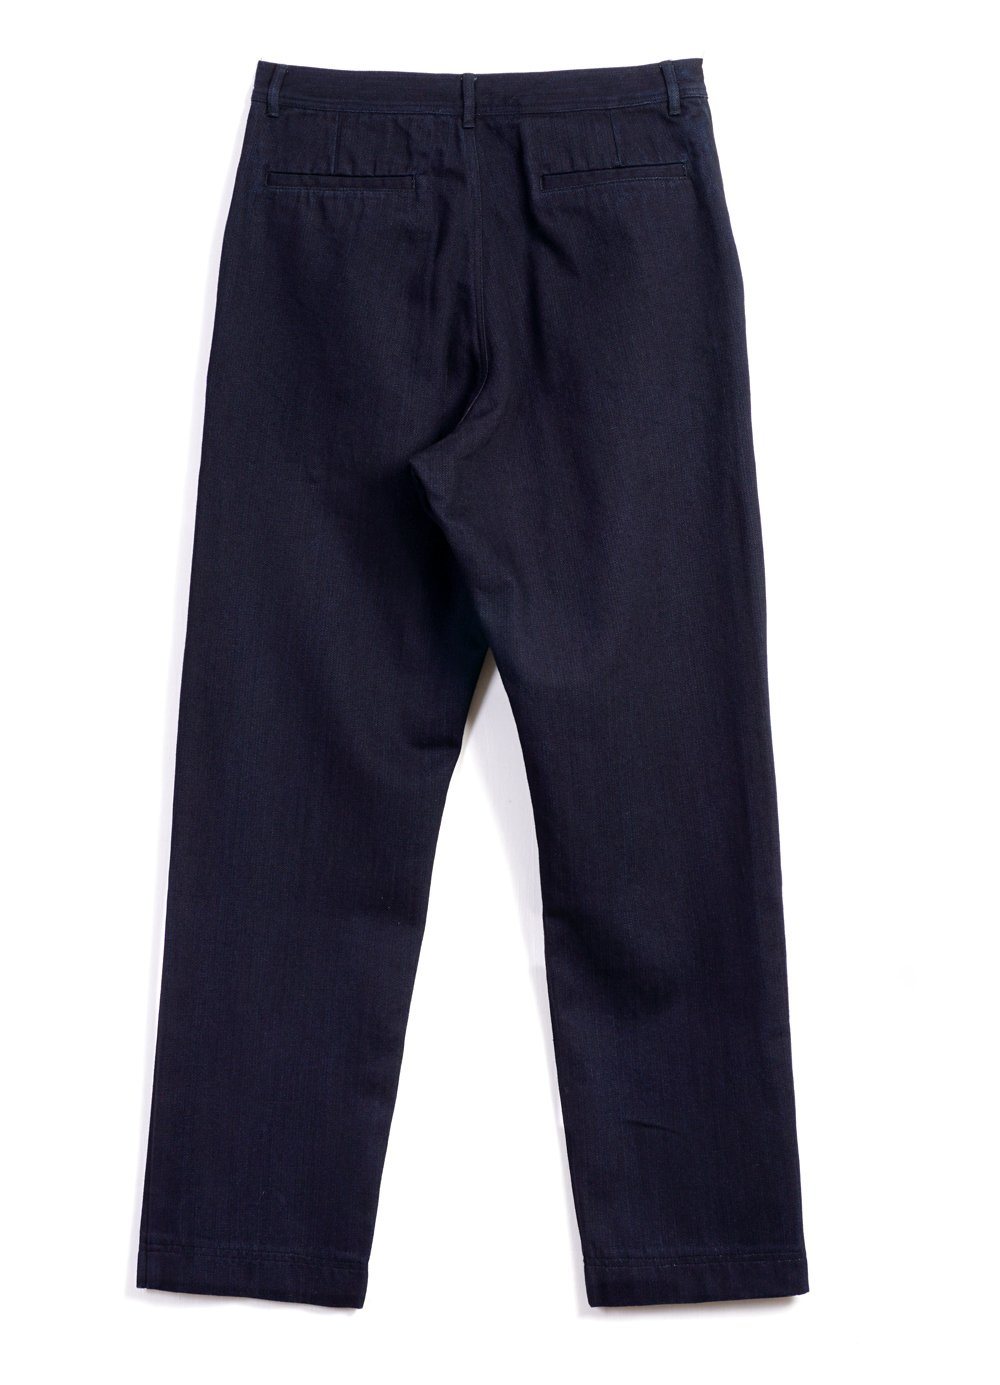 HANSEN GARMENTS - KEN | Wide Cut Work Trousers | Black Indigo - HANSEN Garments